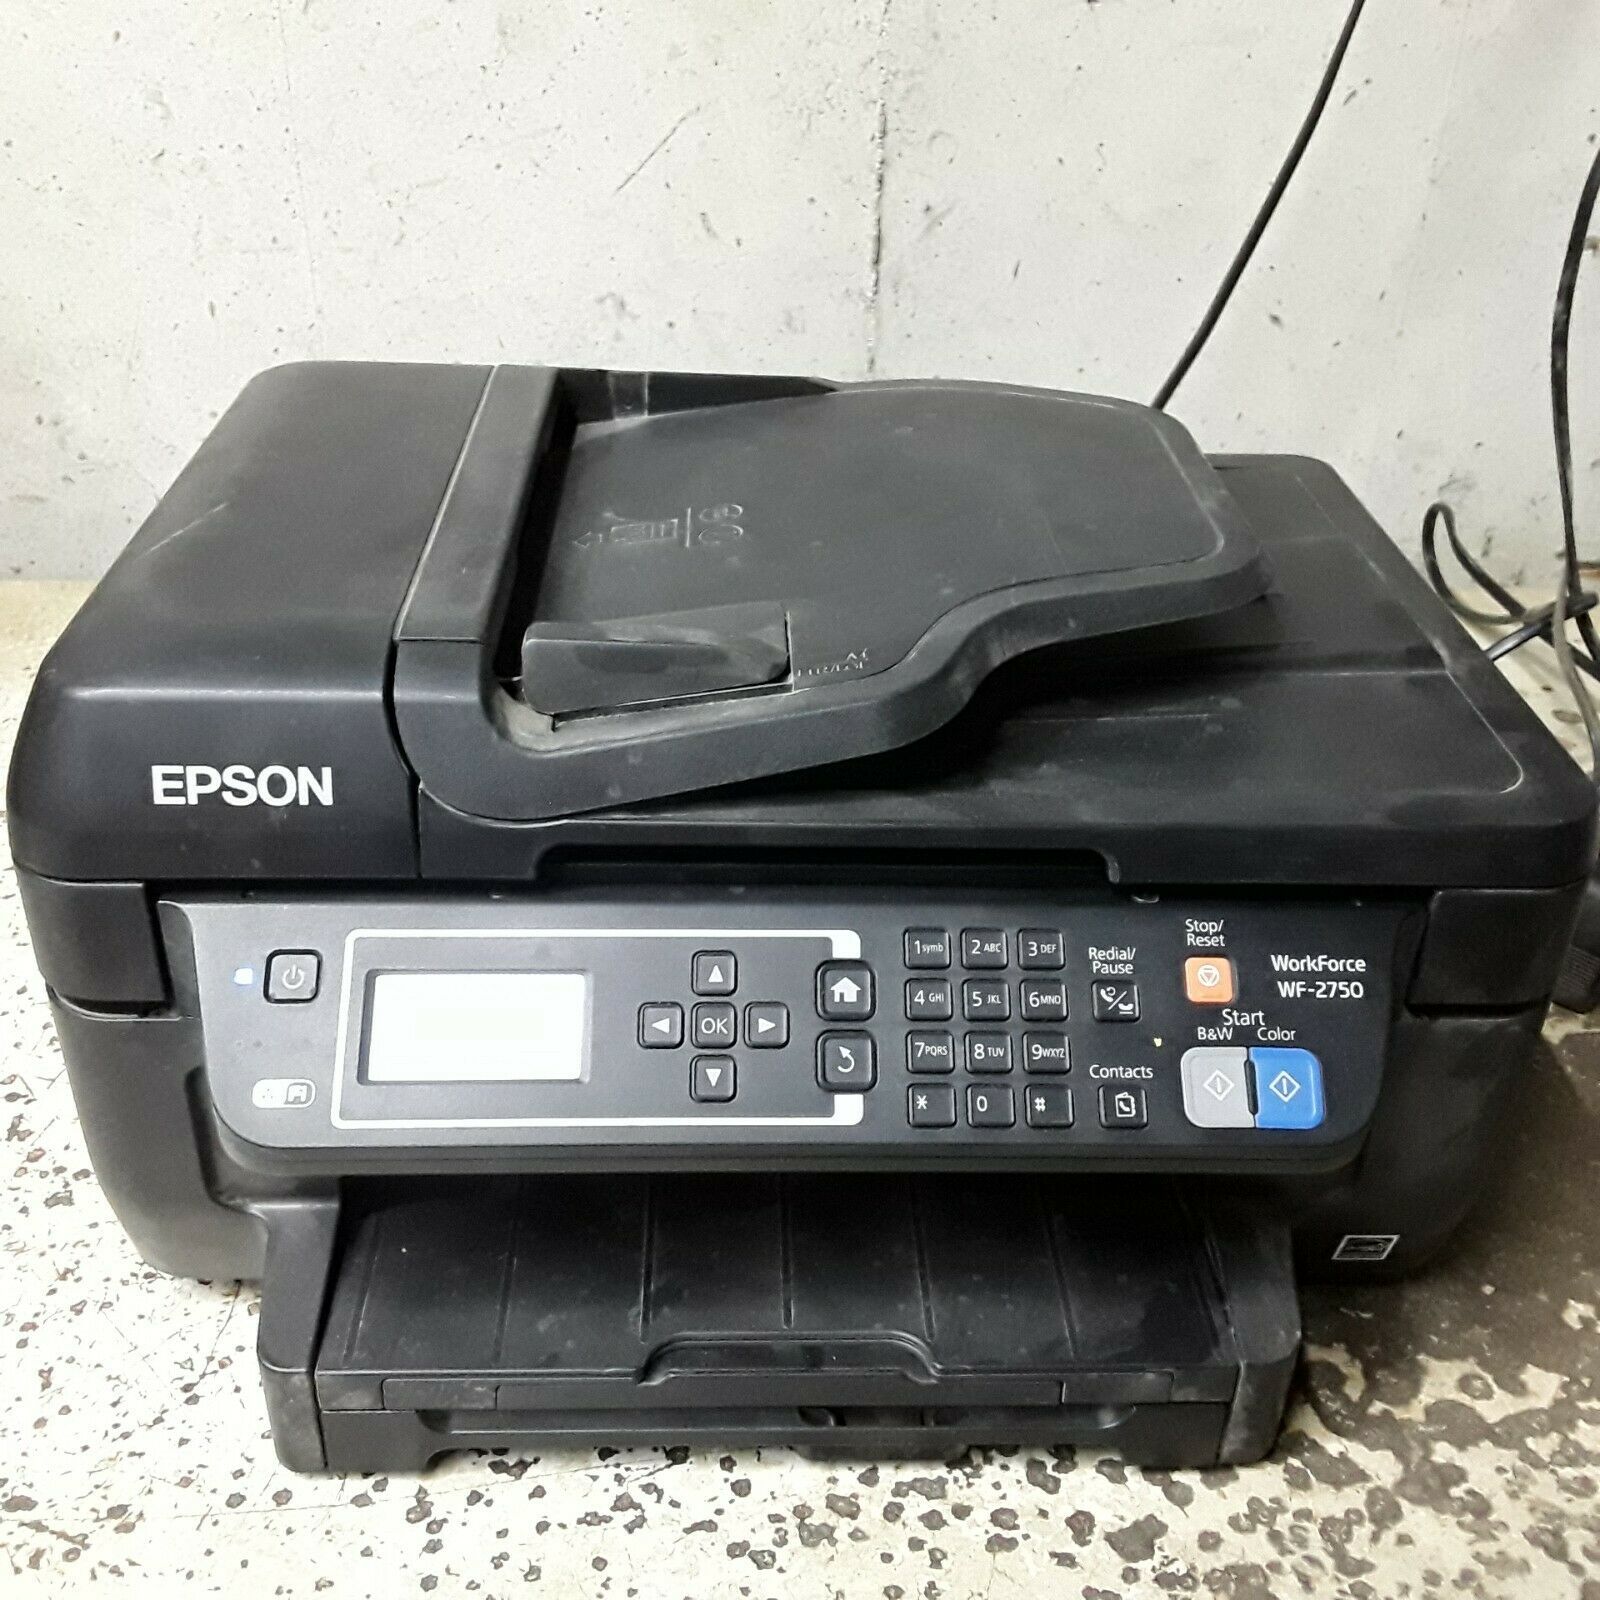 Epson Workforce Wf 2750 All In One Printer For Parts Or Repair Error 0xf4 Printers 6141